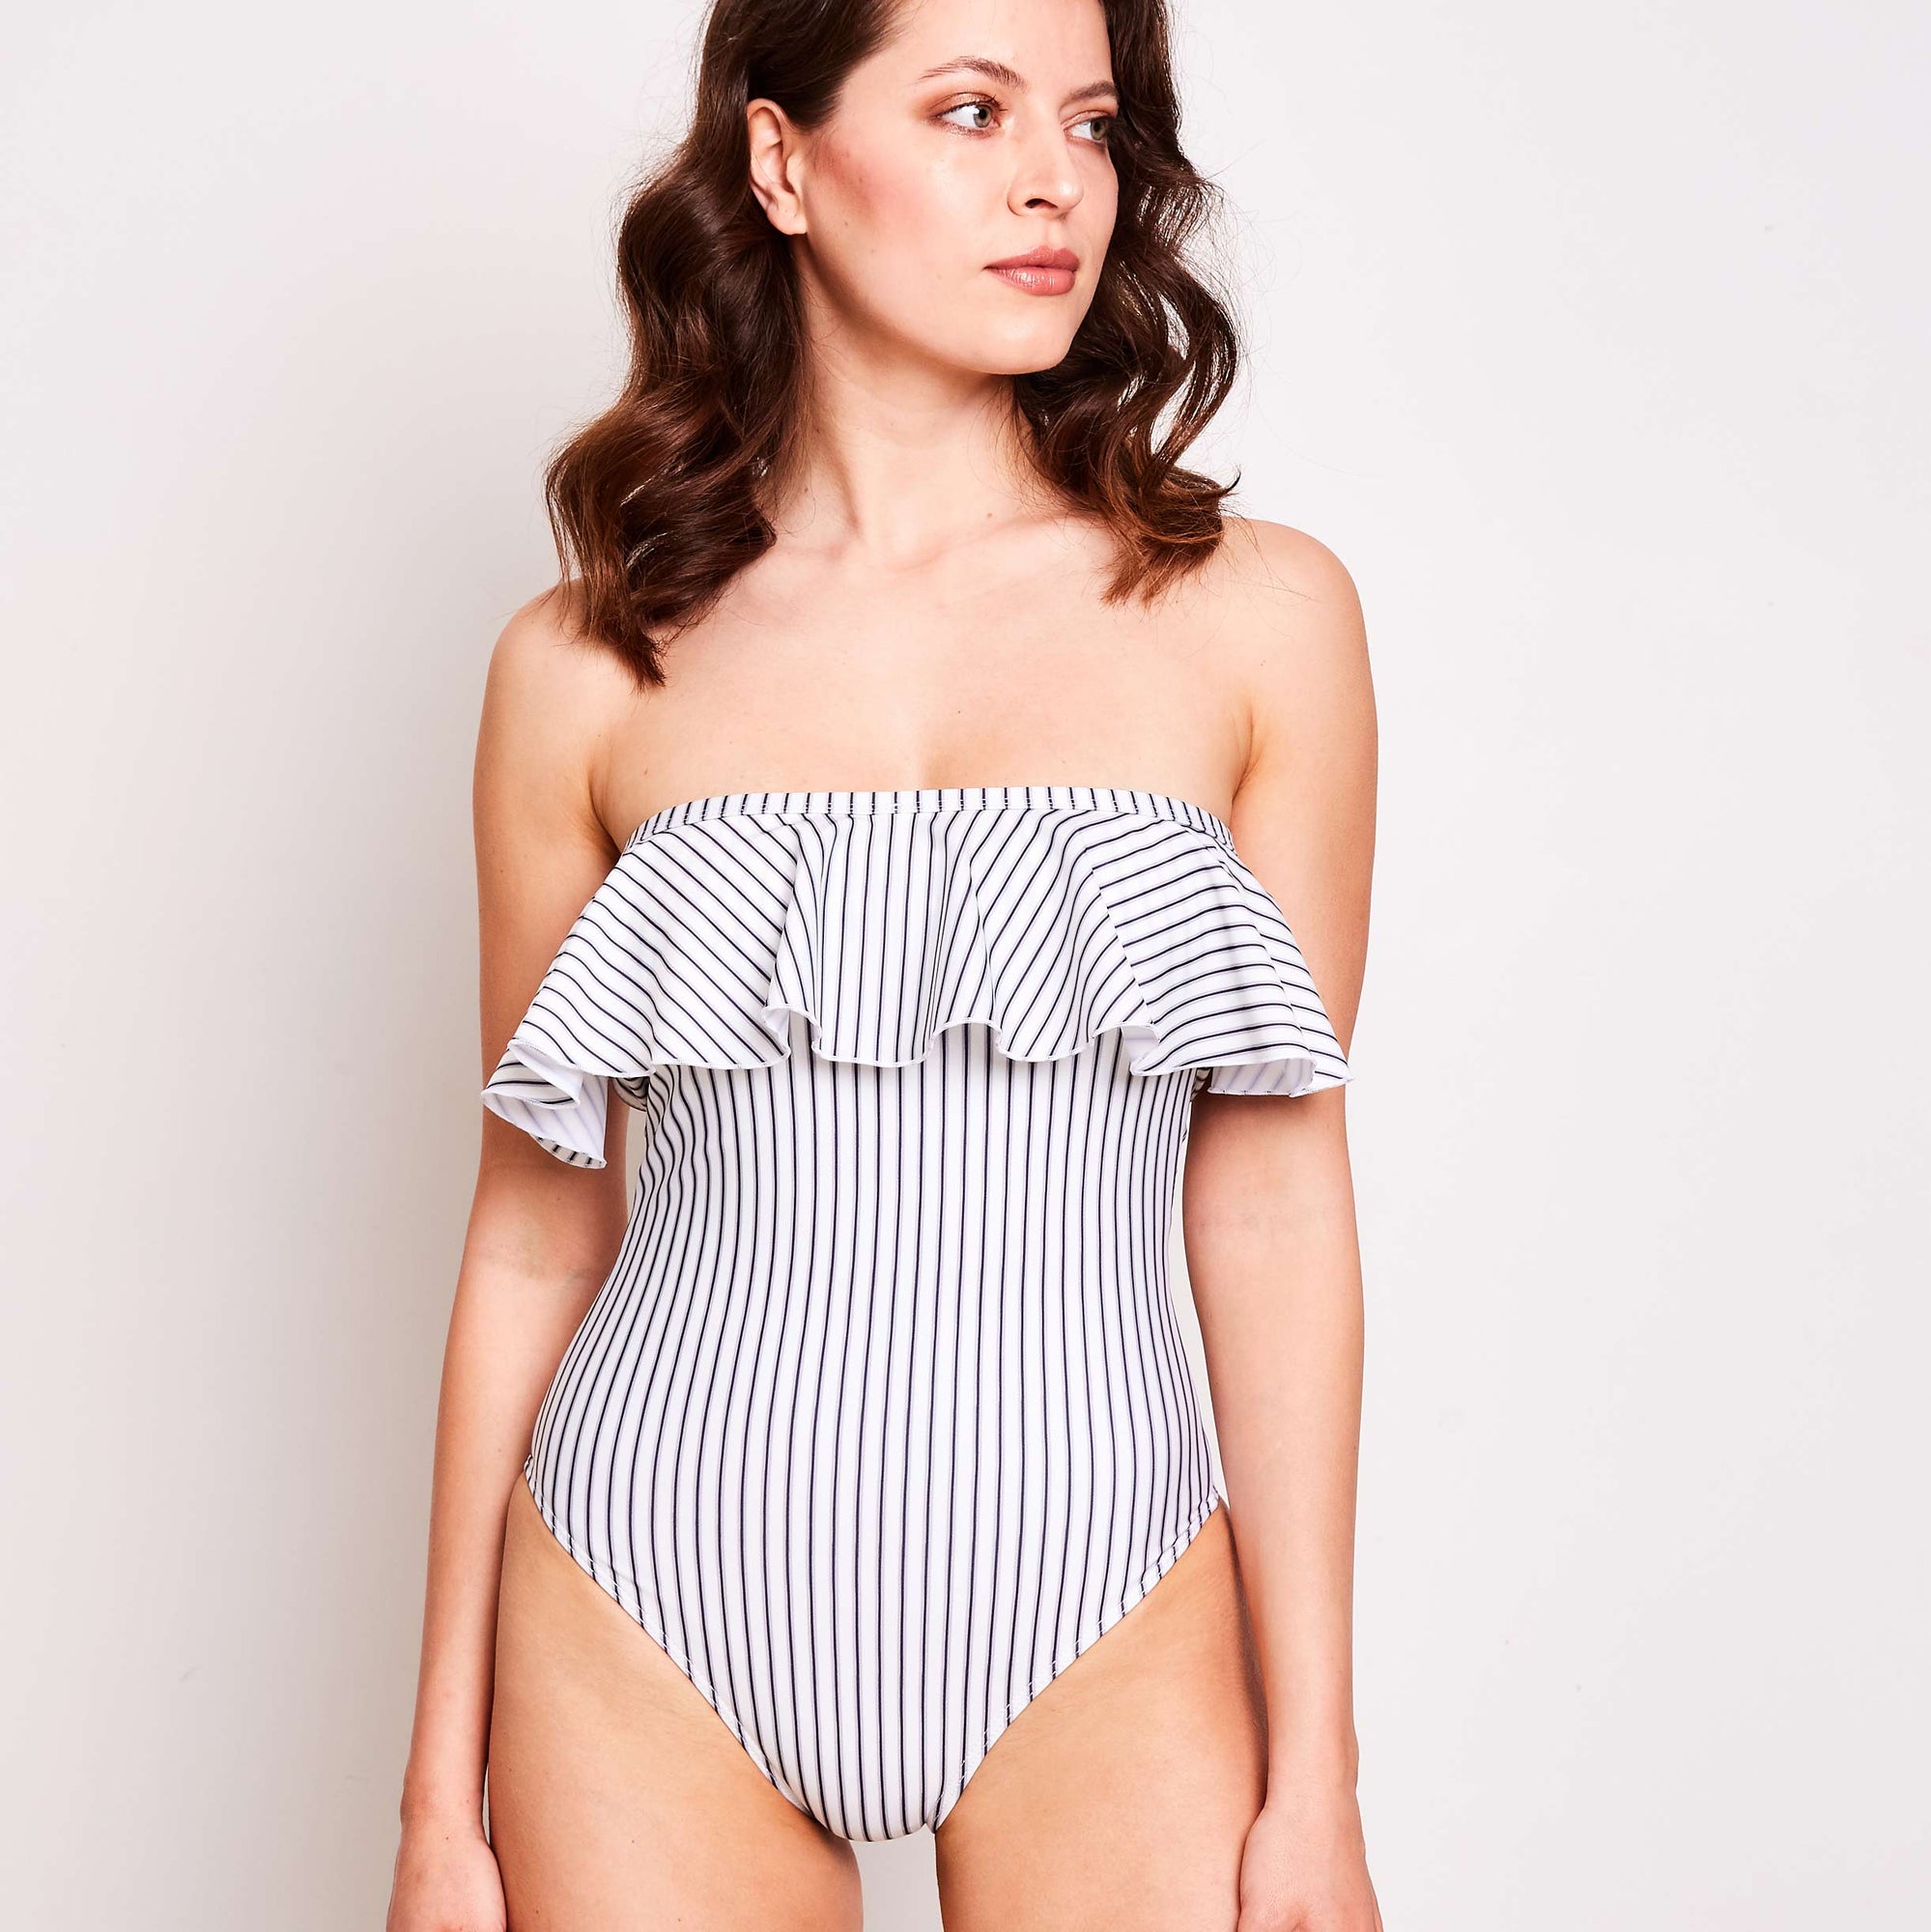 Olivia-one-piece-pinstripes-1-contessa-volpi-summer-swimwear-collection